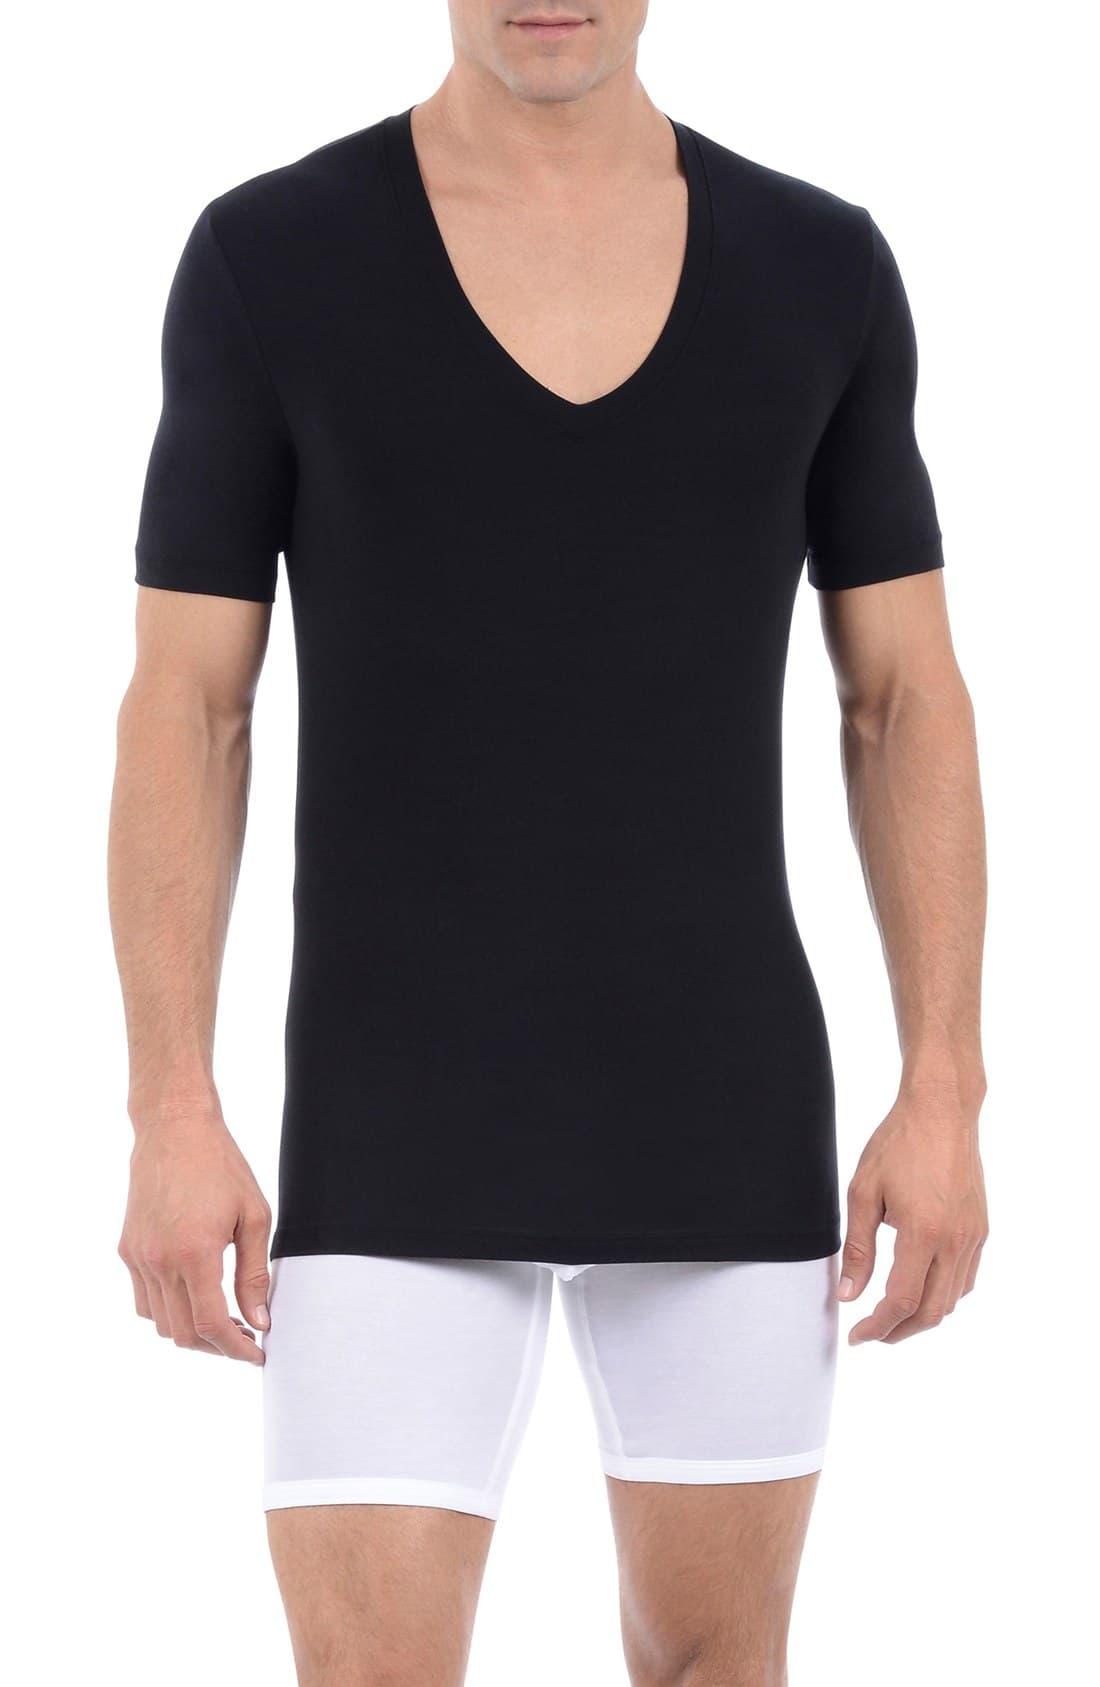 Tommy John Cool Cotton Deep V-neck Undershirt in Black for Men - Lyst